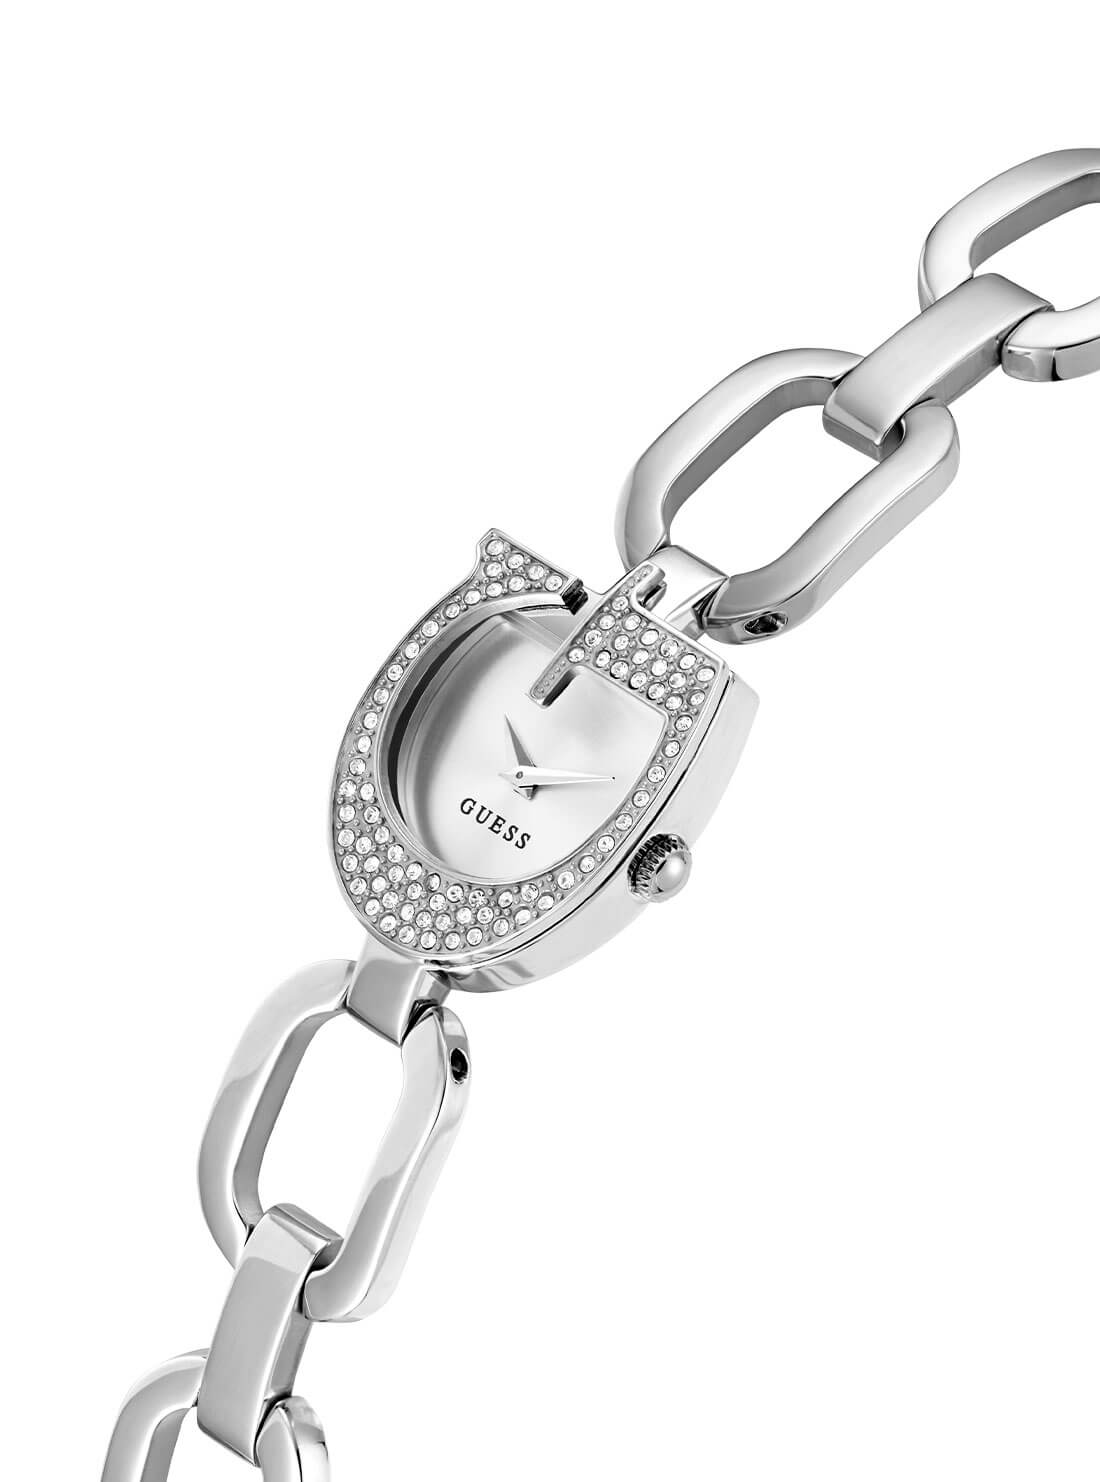 Silver Gia Logo Link Watch | GUESS Women's Watches | detail view